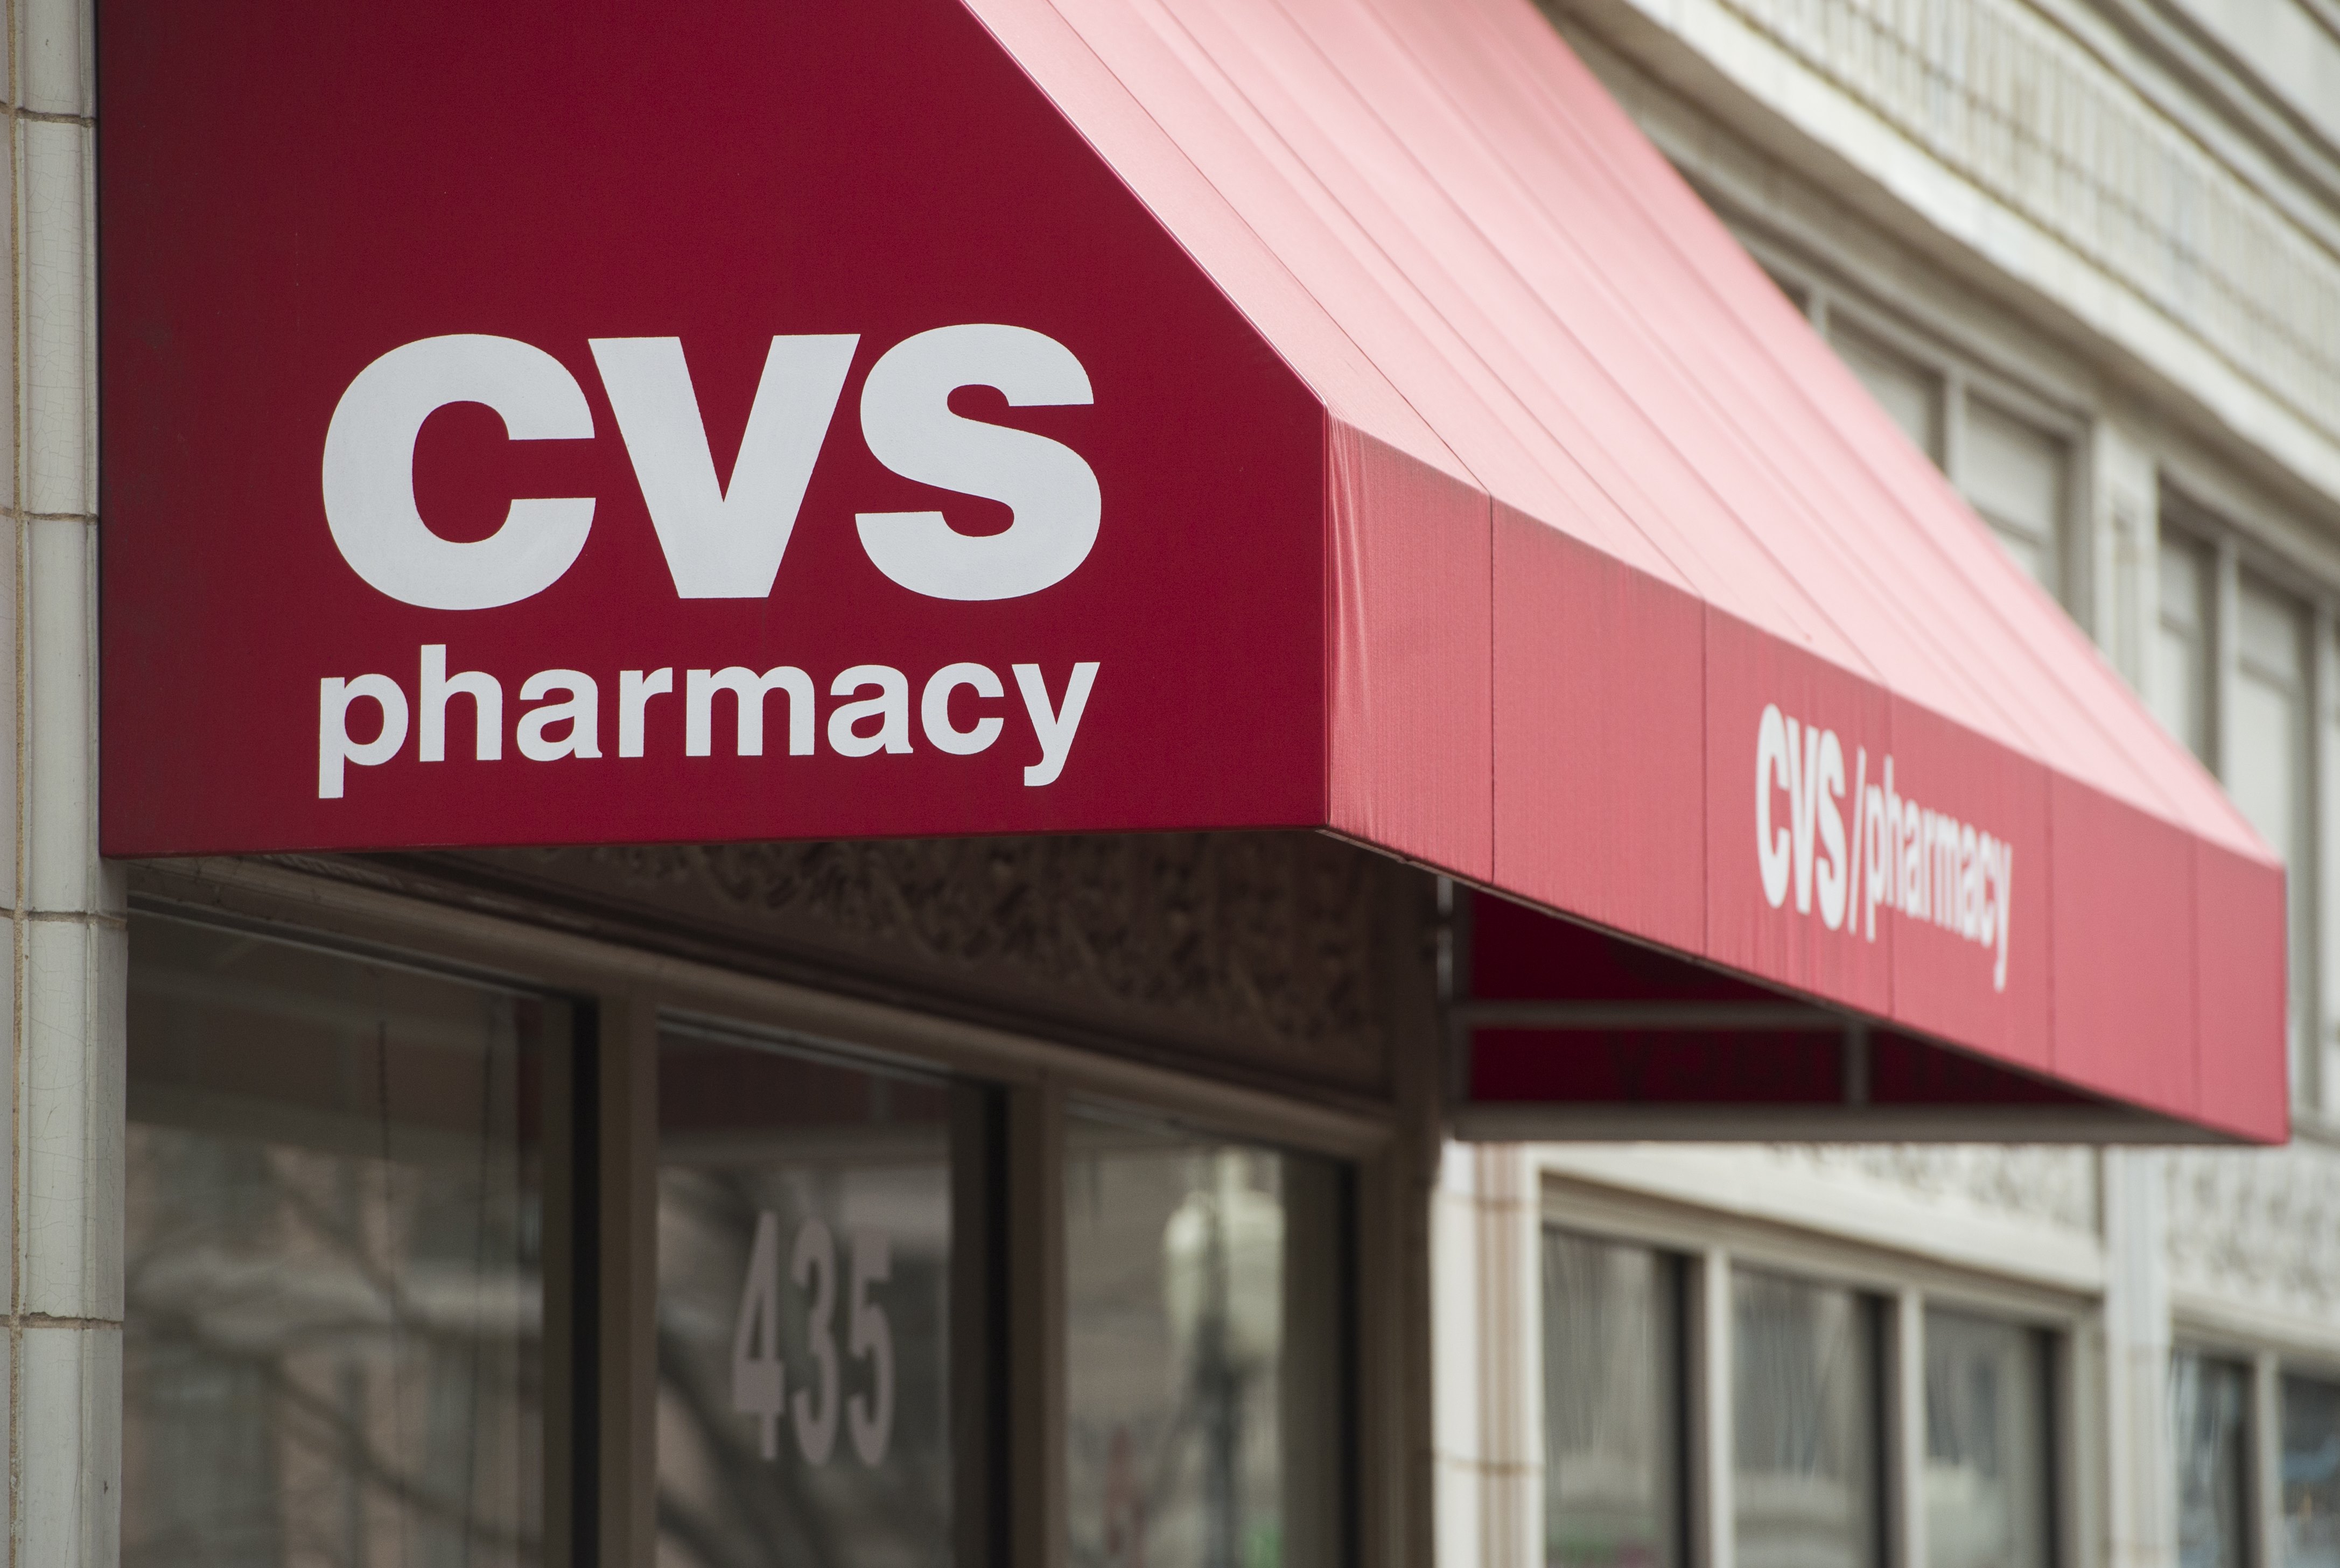 A CVS Pharmacy sign in Washington